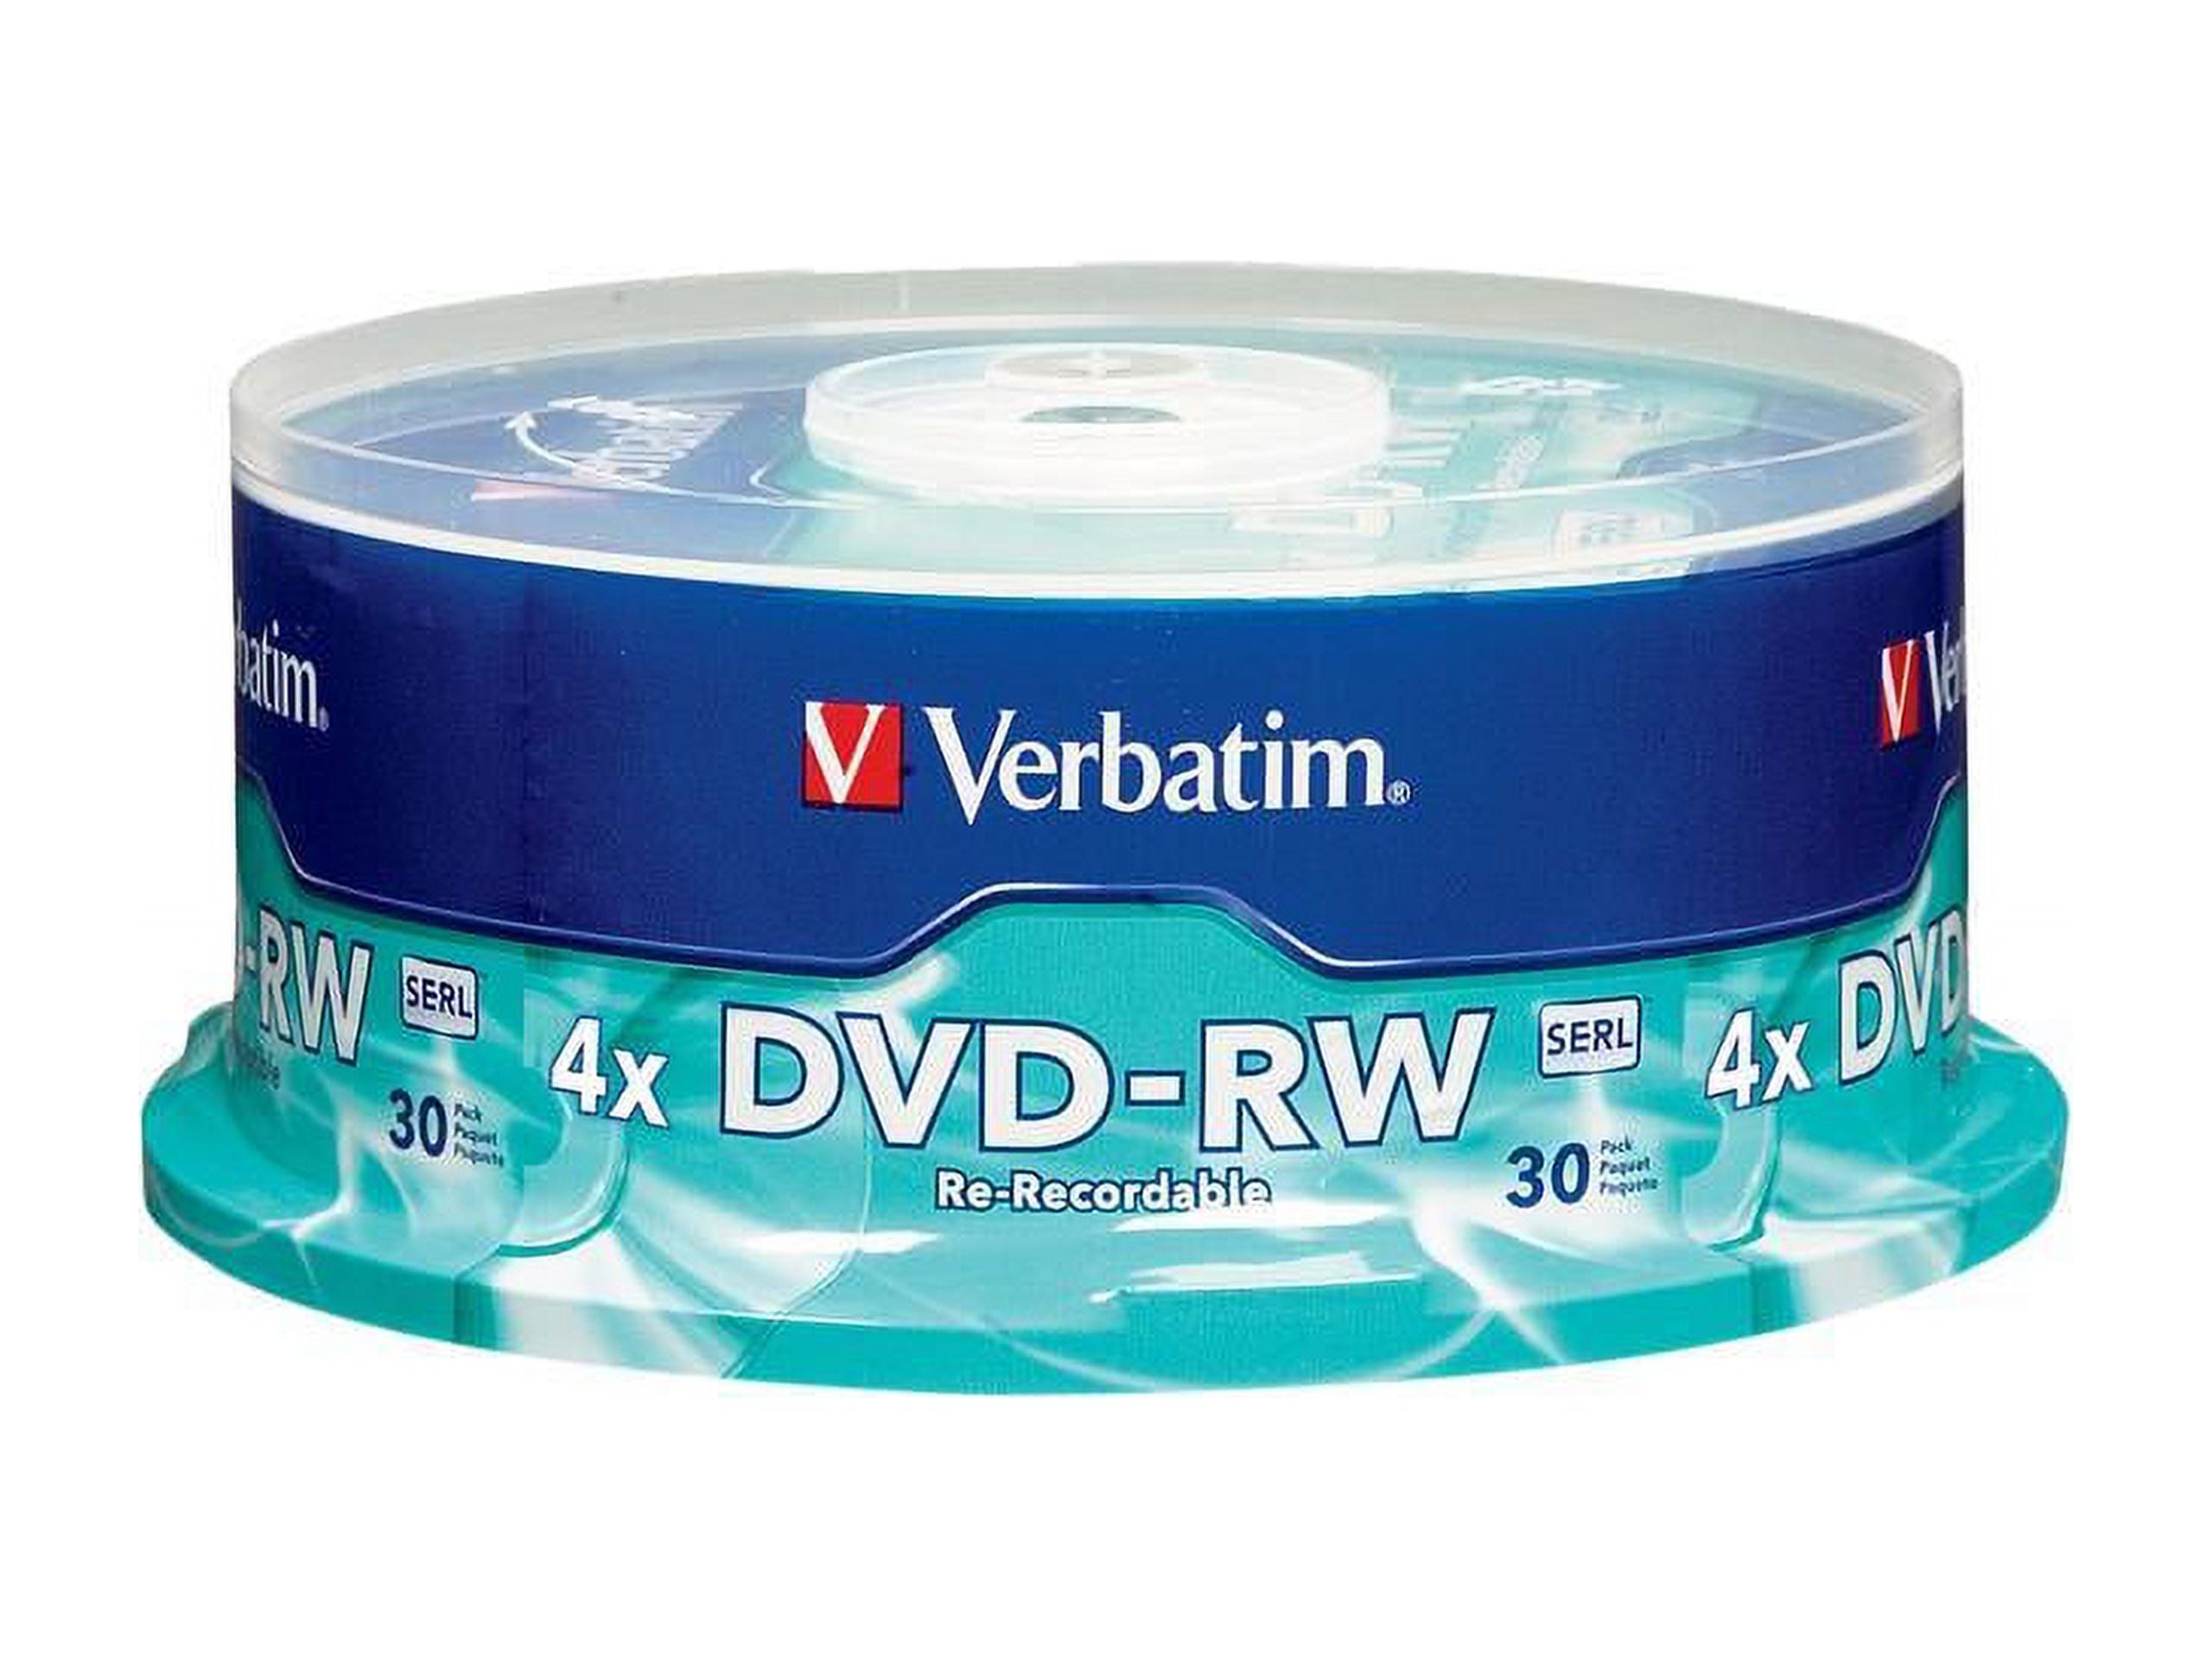 Verbatim 4.7GB 4X DVD-RW 30 Packs Spindle Disc Model 95179 - image 1 of 2